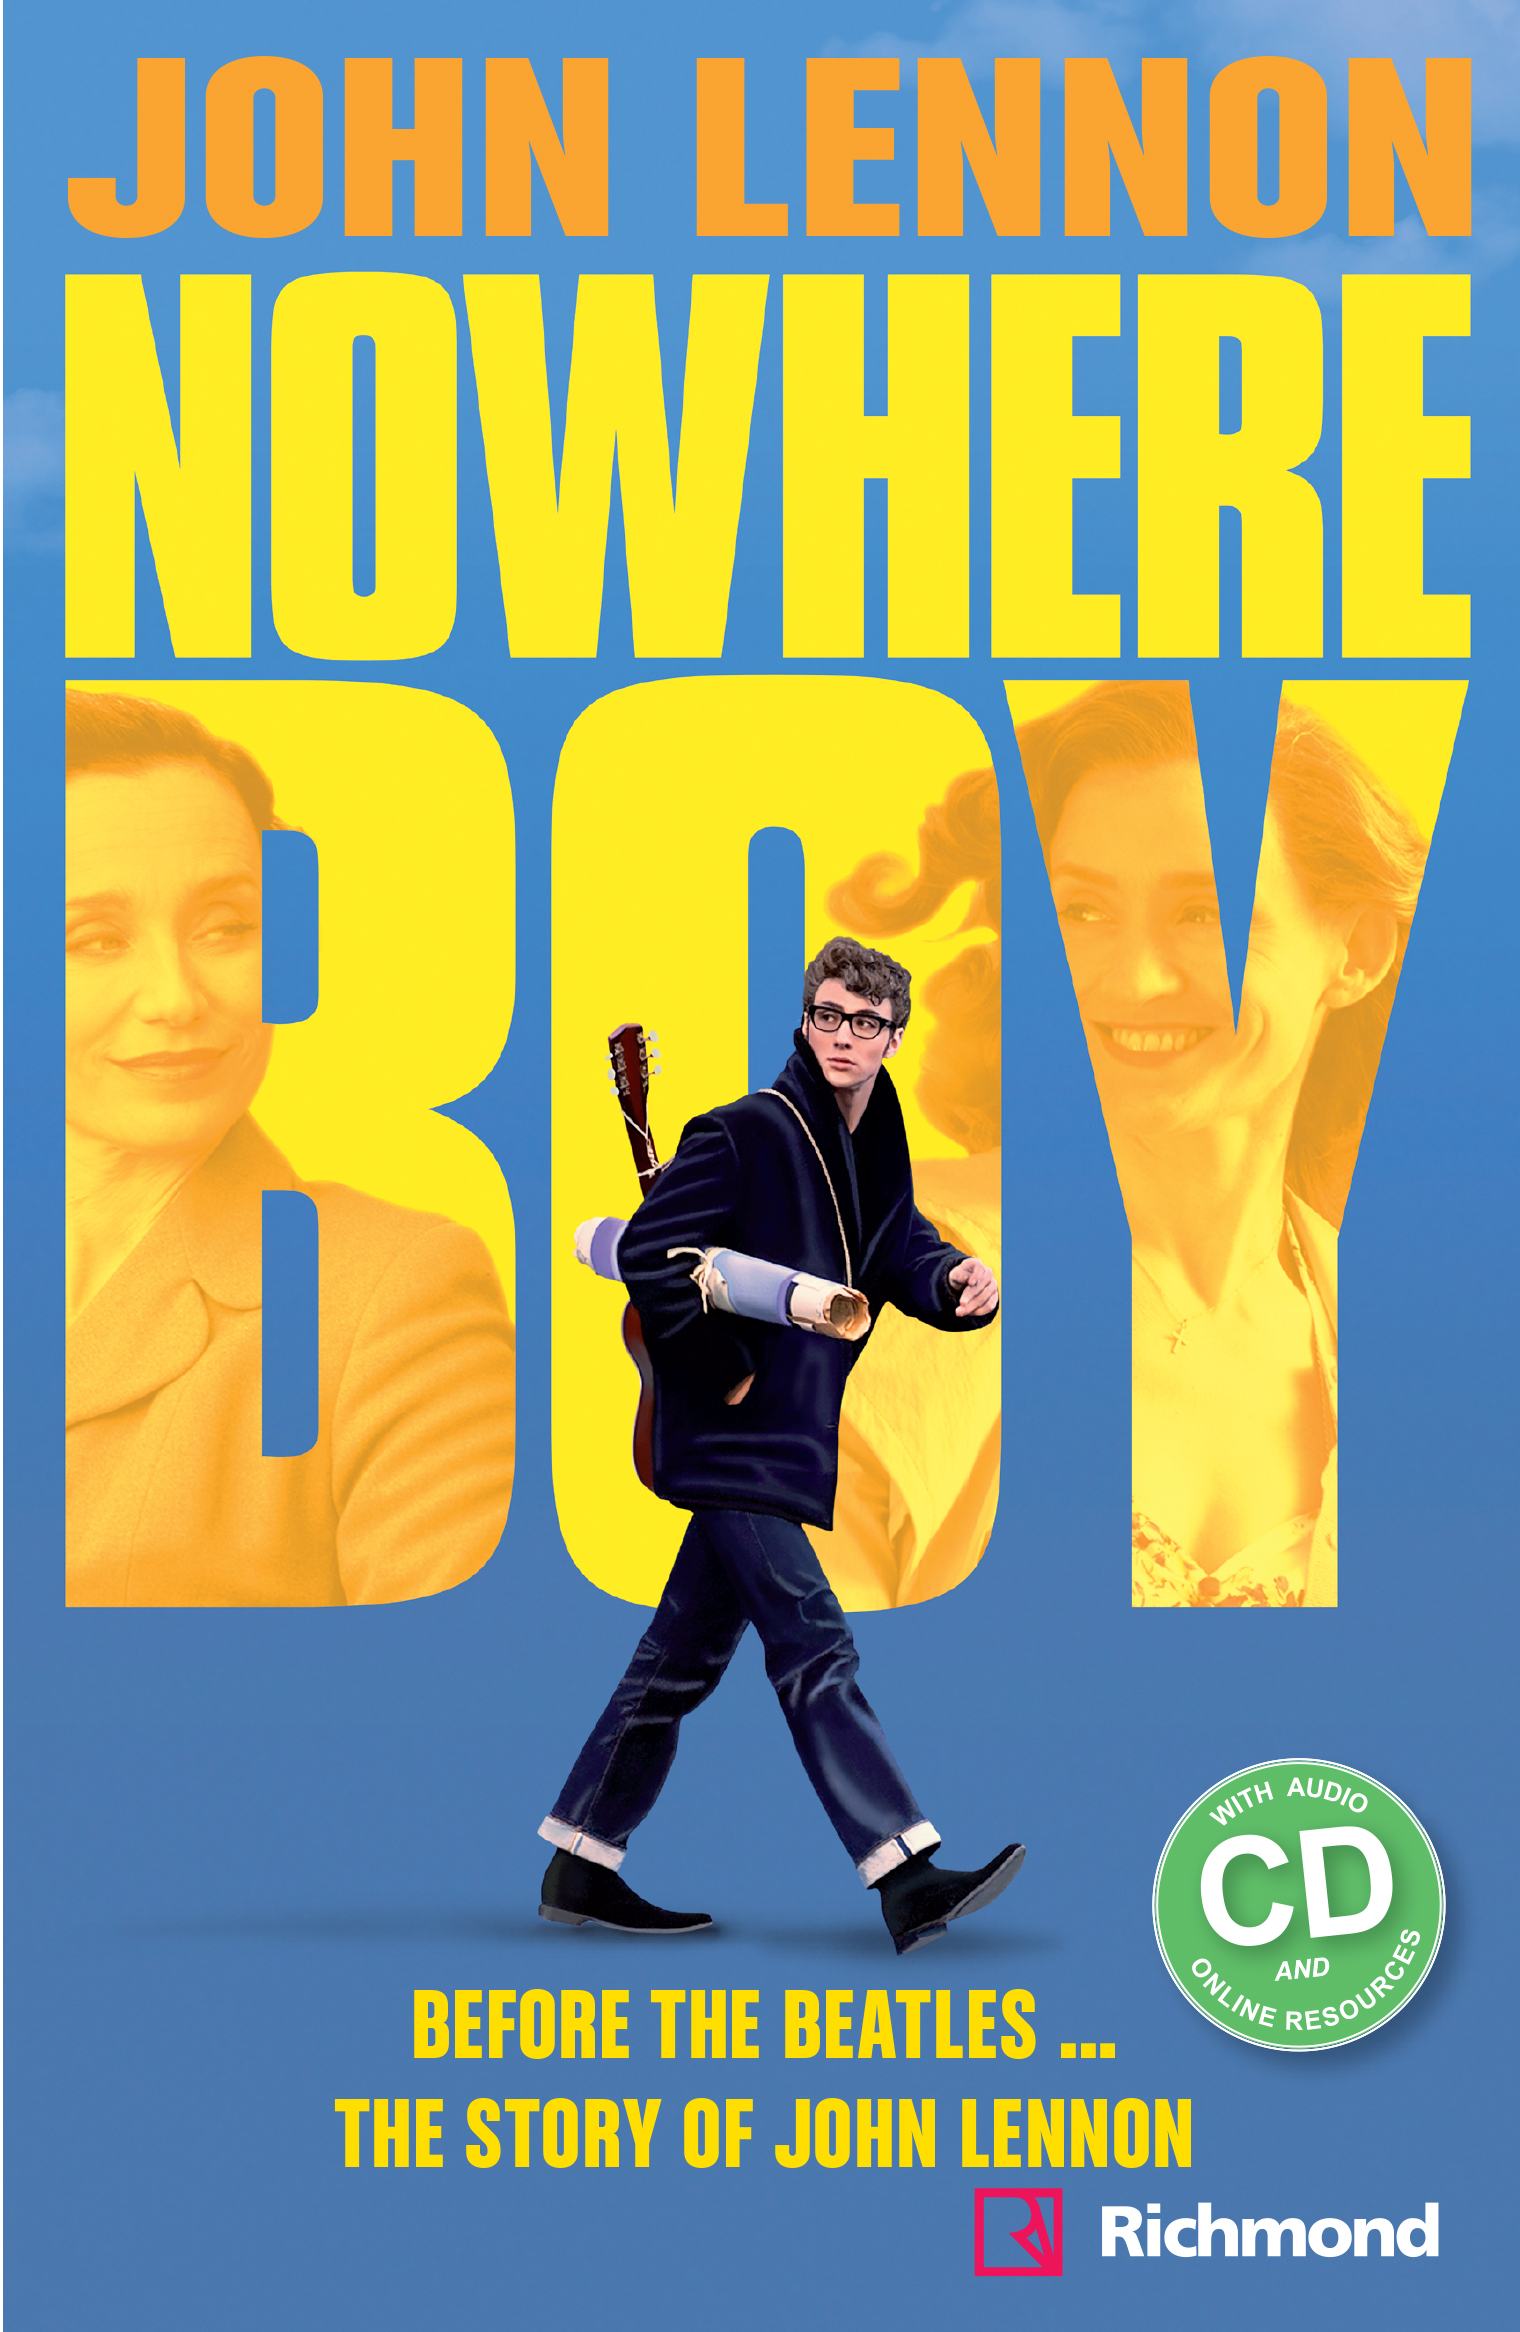 John Lennon: Nowhere Boy